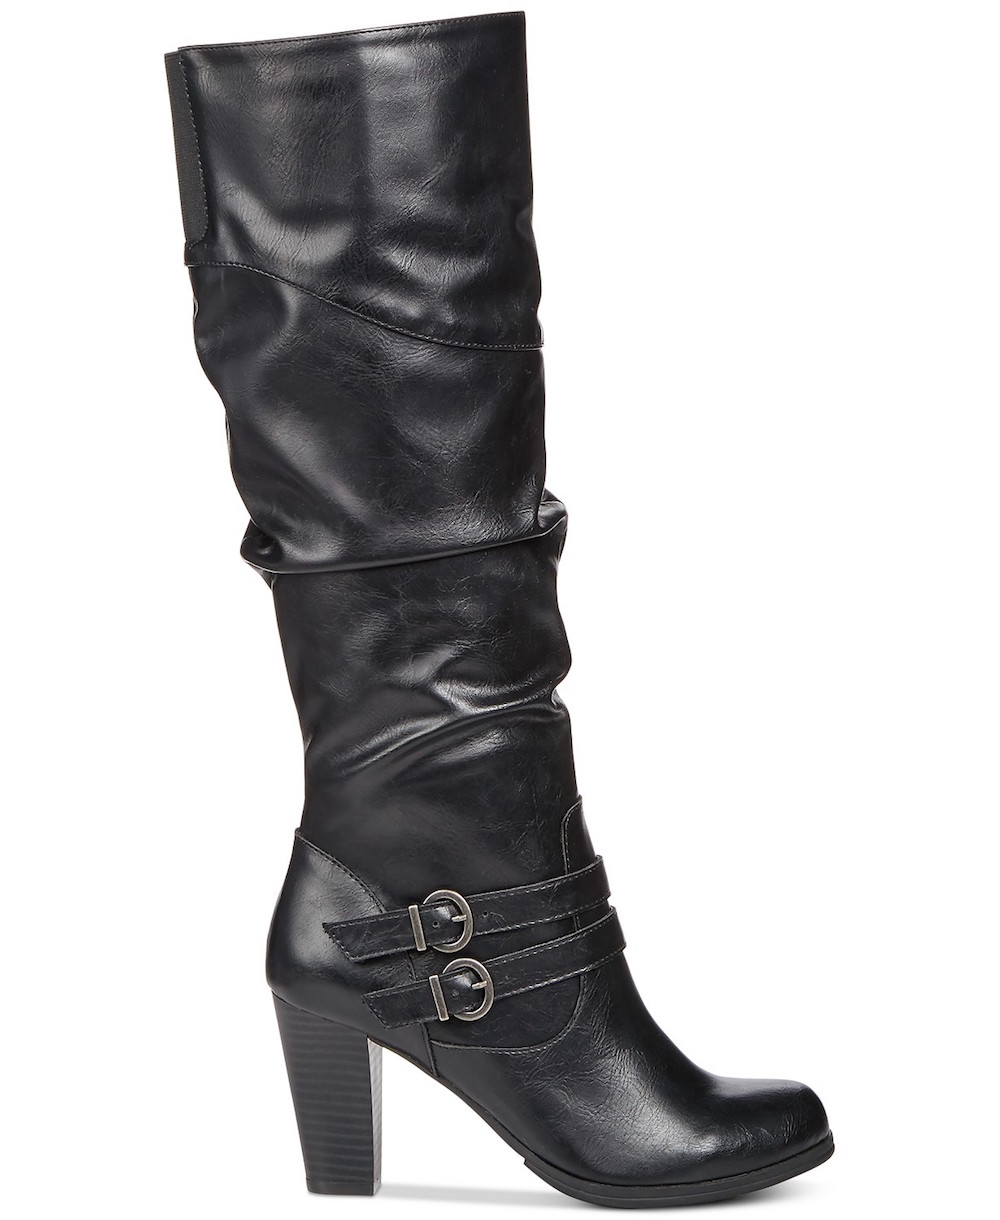 Style & Co. Womens Sana Almond Toe Knee High Fashion Boots, Black, Size ...